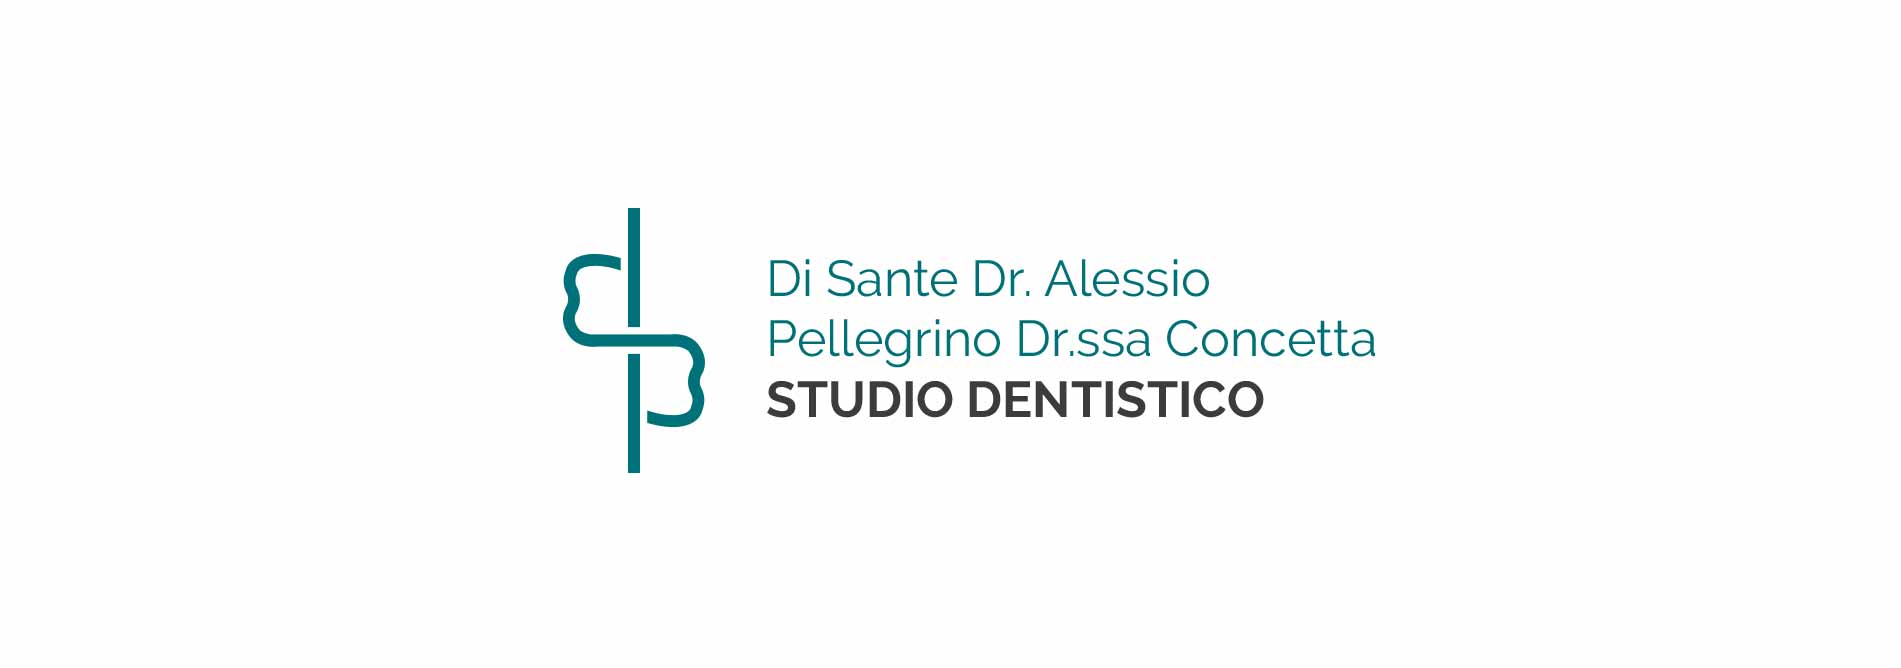 idea variante alternativa logo studio dentistico